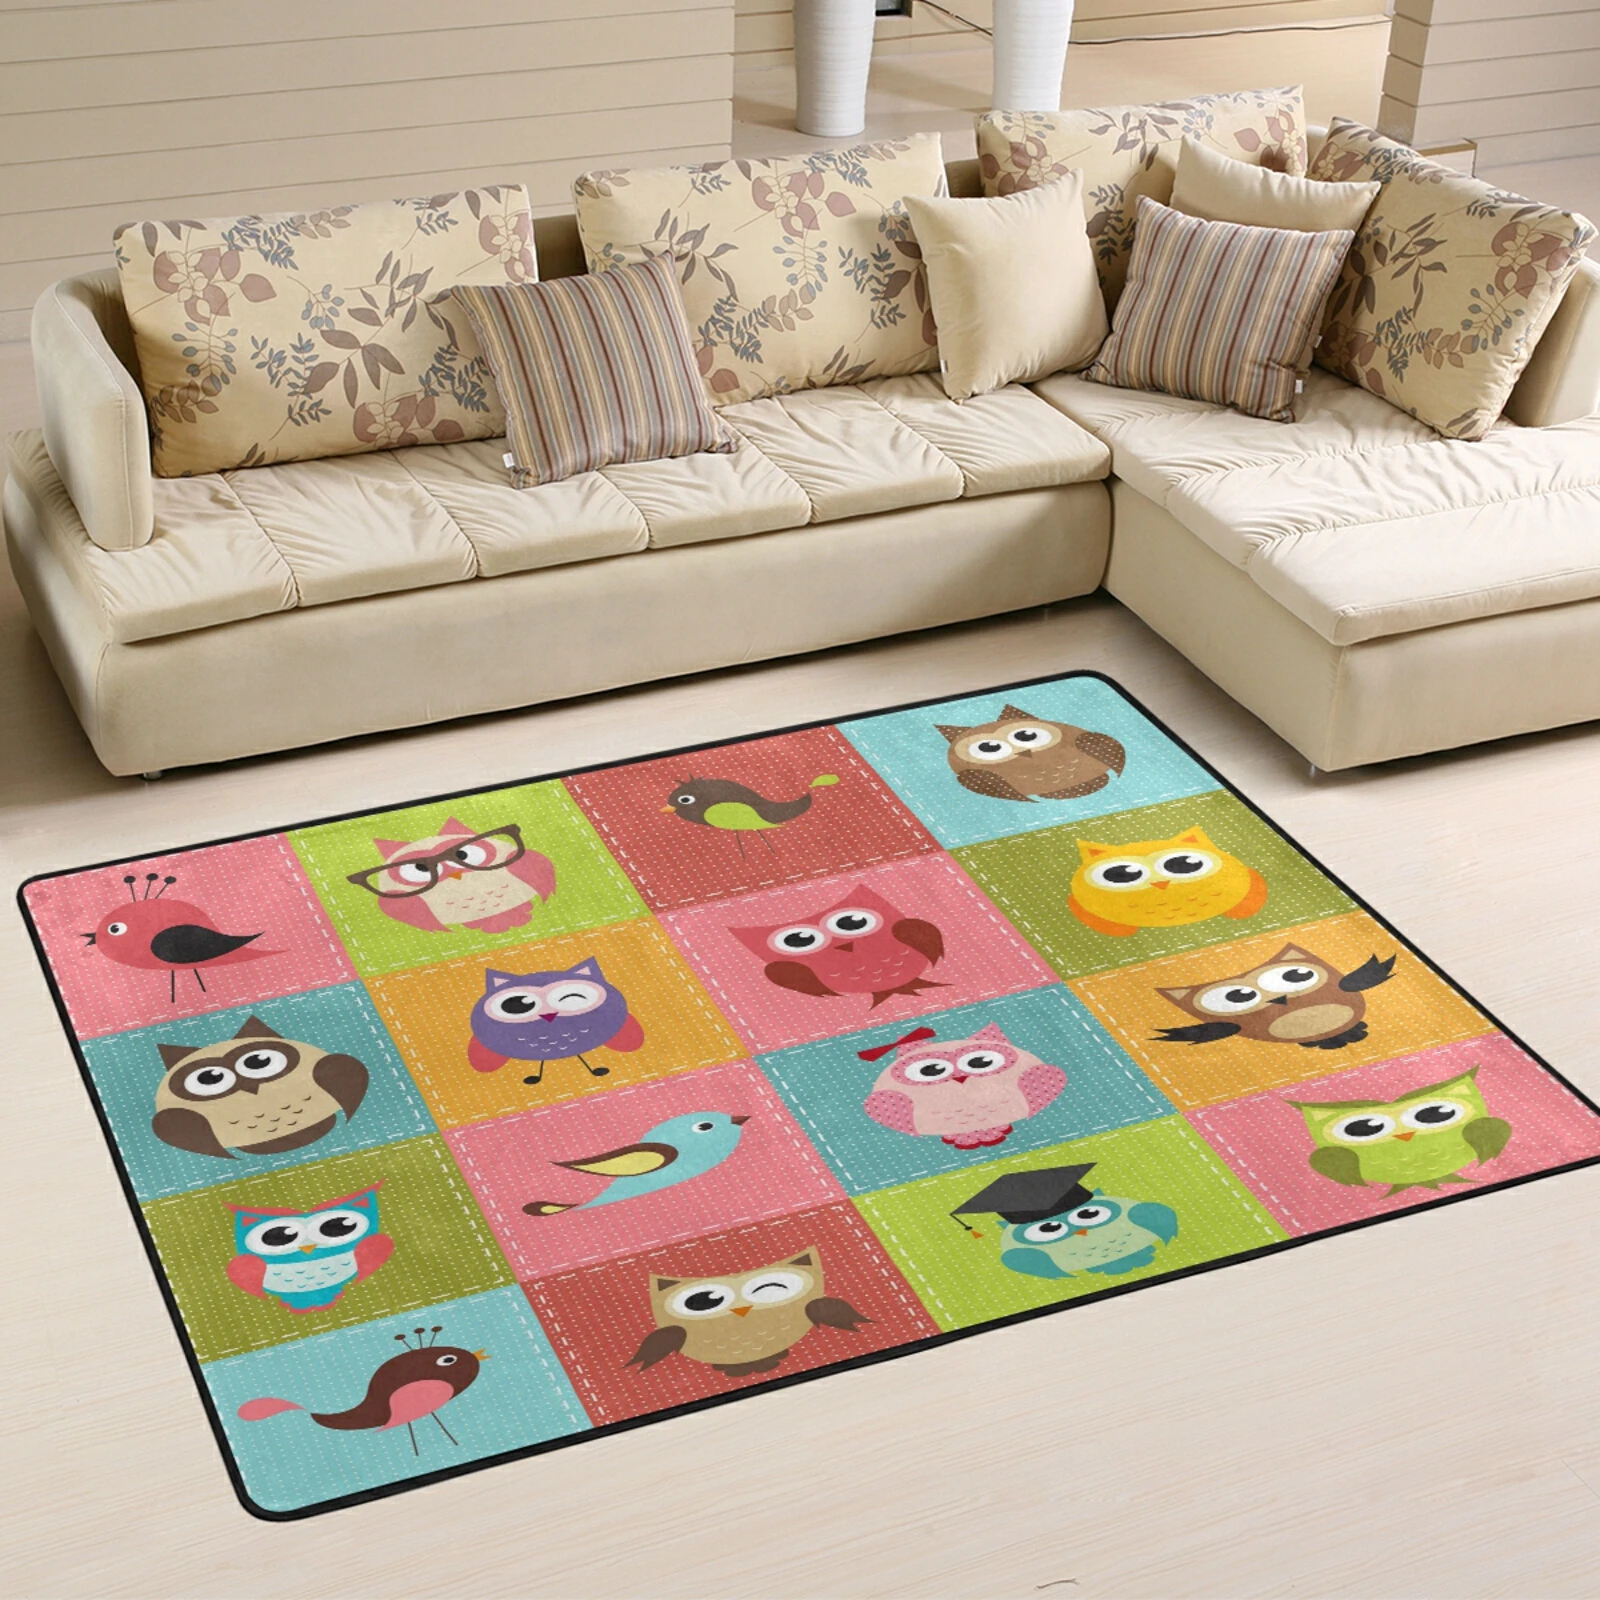 

Colorful Cartoon Owl Printed Children Carpet For Living Room Bedroom Decor Water Absorption Non-slip Floor Mat Area Rug Doormat